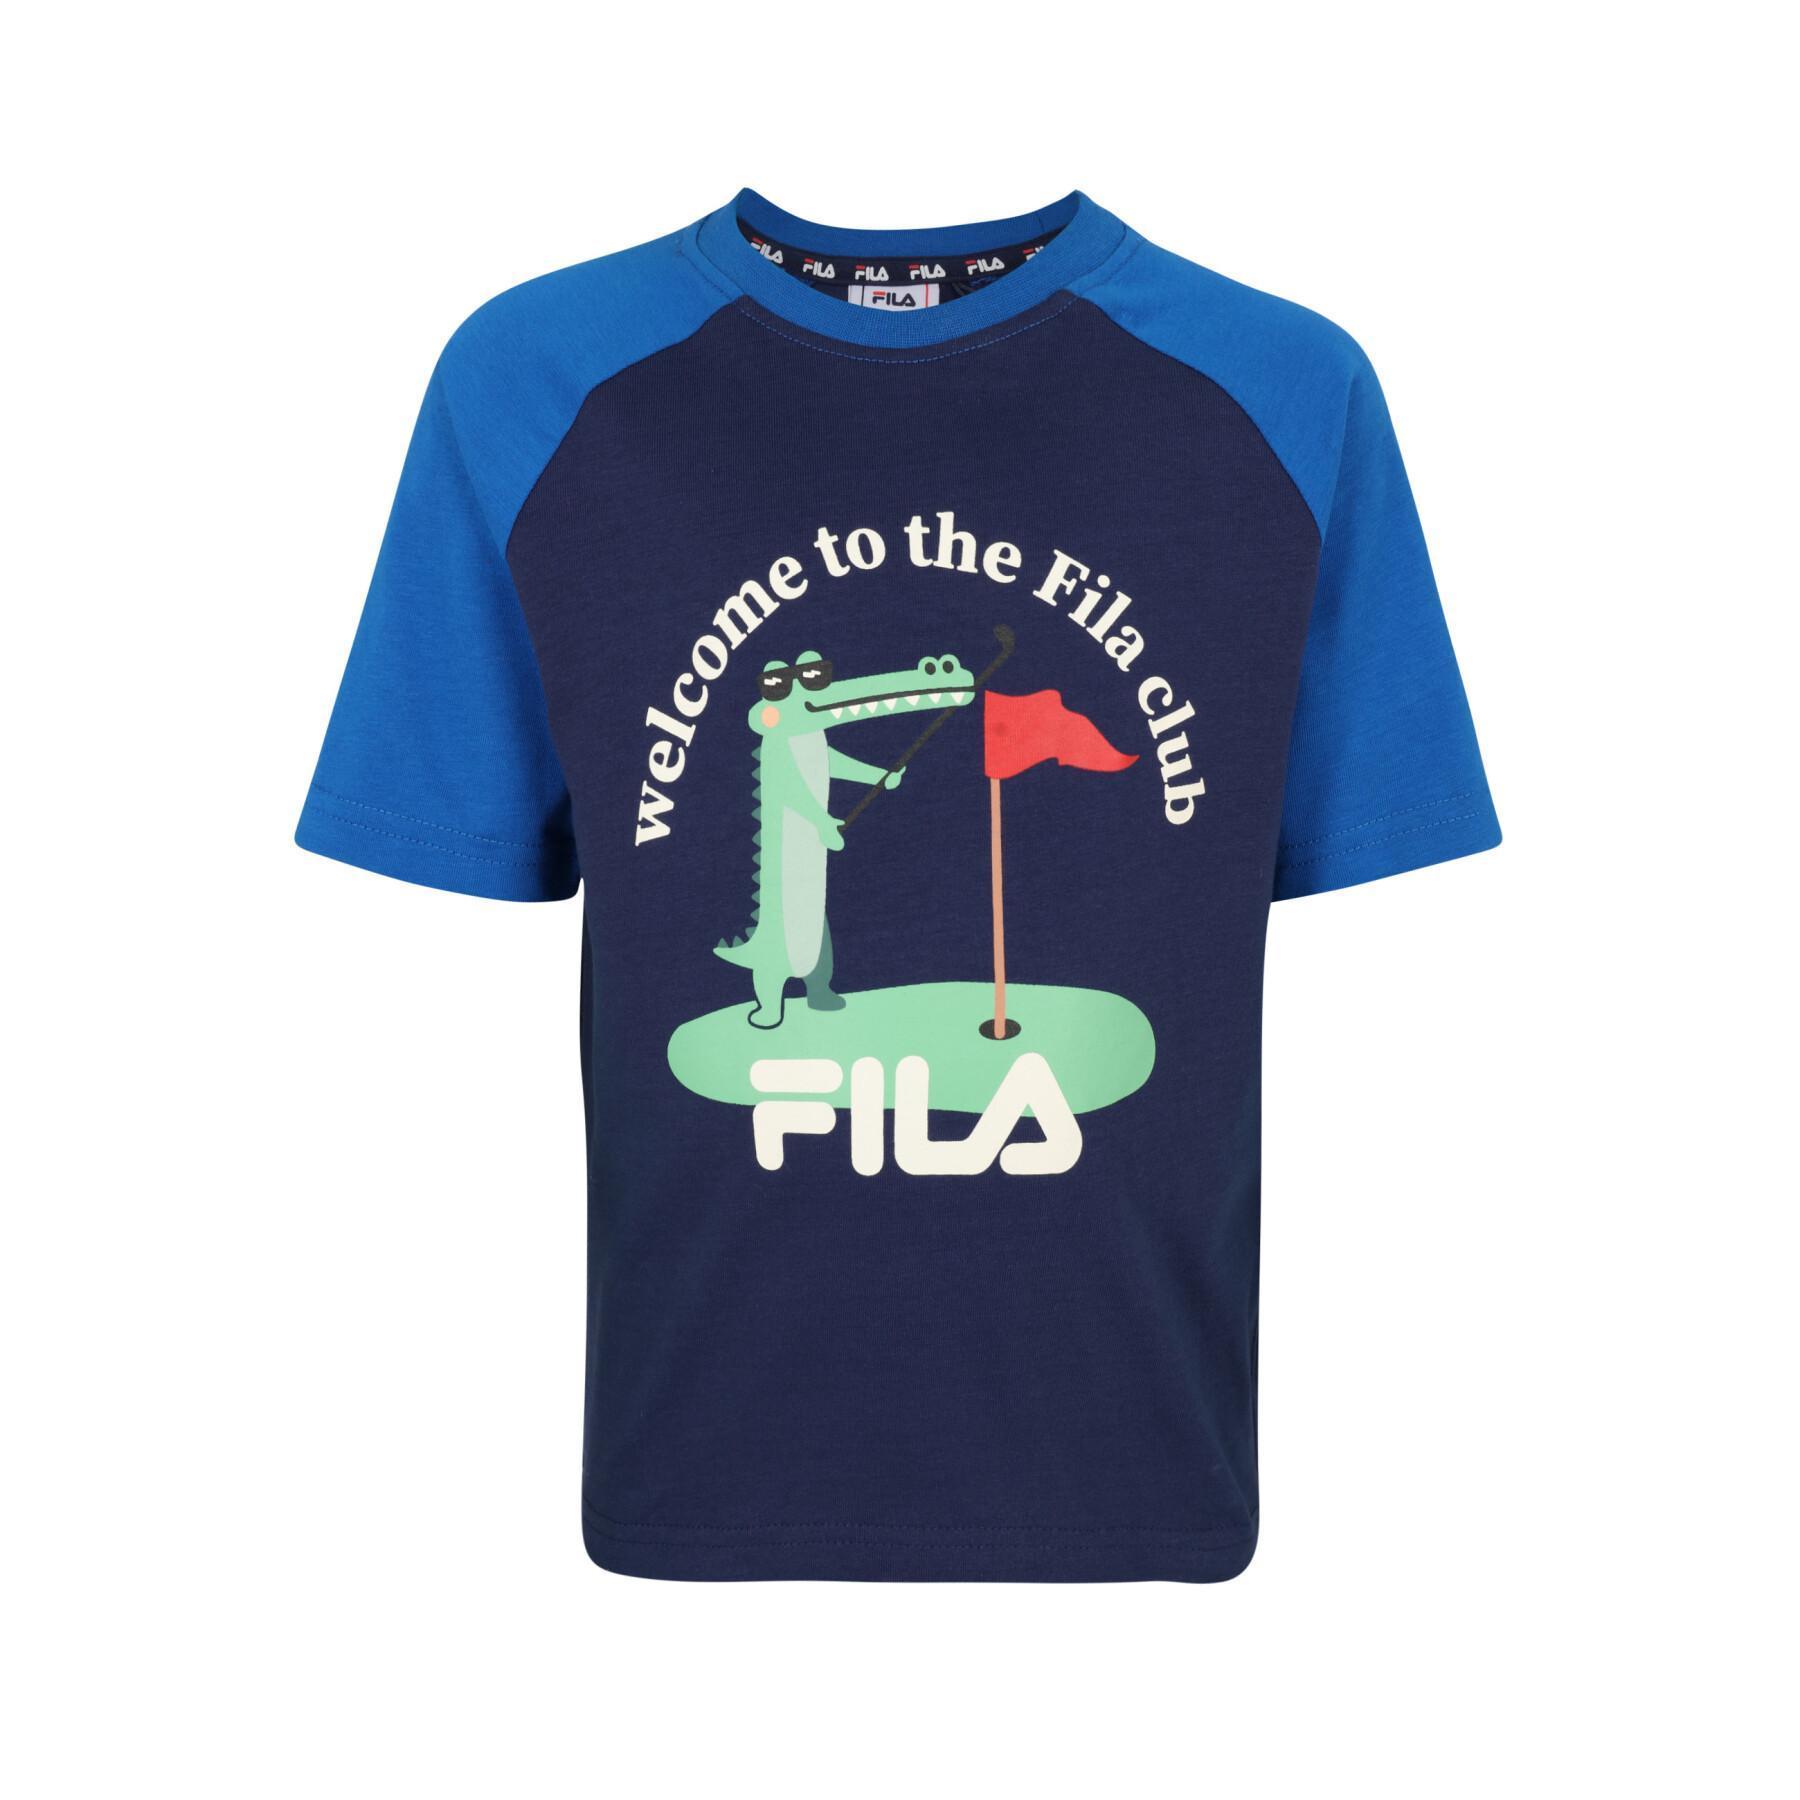 T-Shirt für Babies Fila